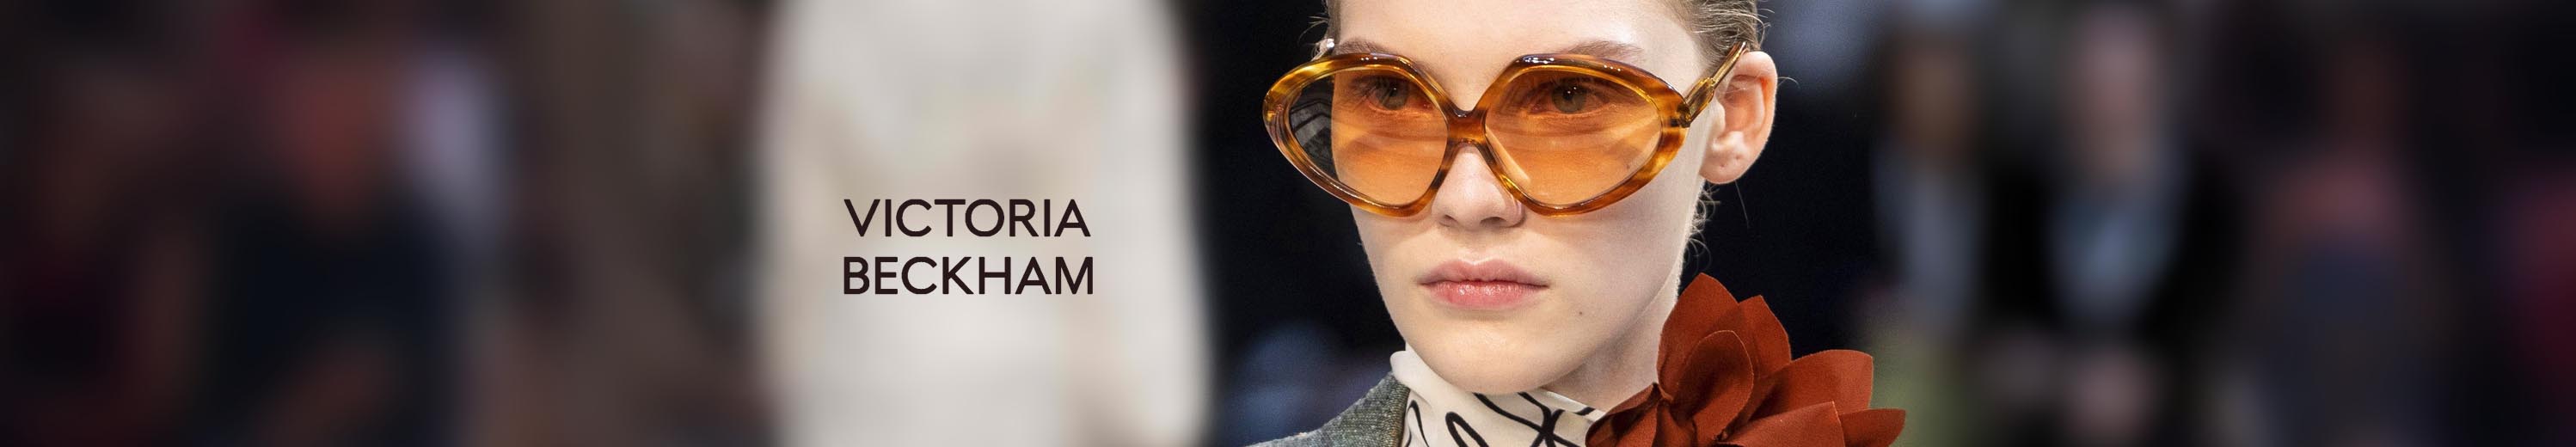 Victoria Beckham Glasses and Eyewear